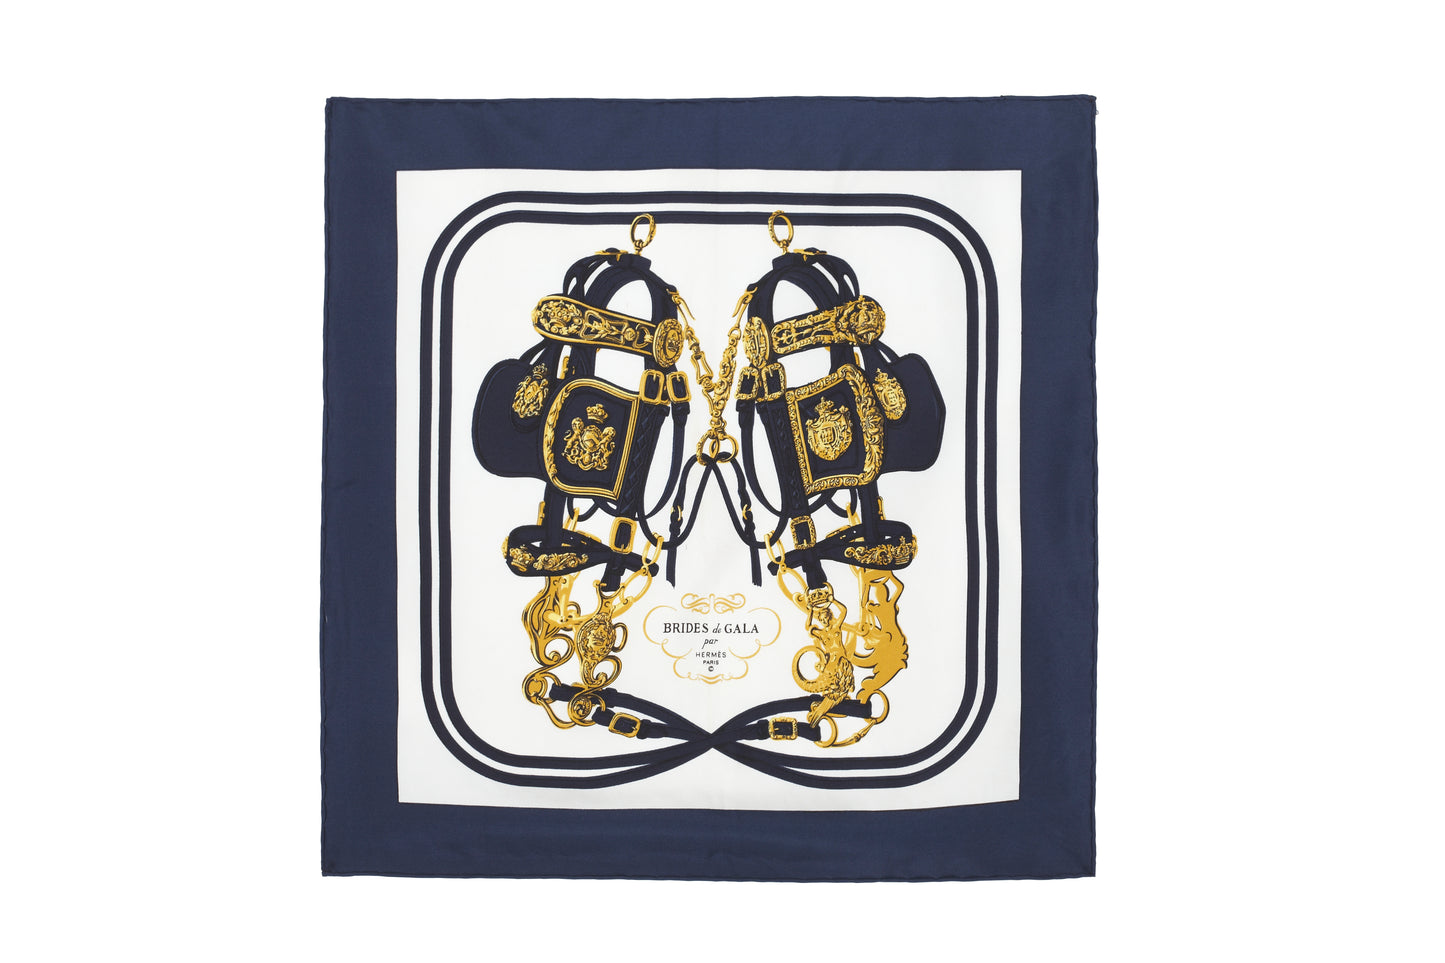 Hermes 'Brides de Gala' navy blue neck scarf with bridle motif